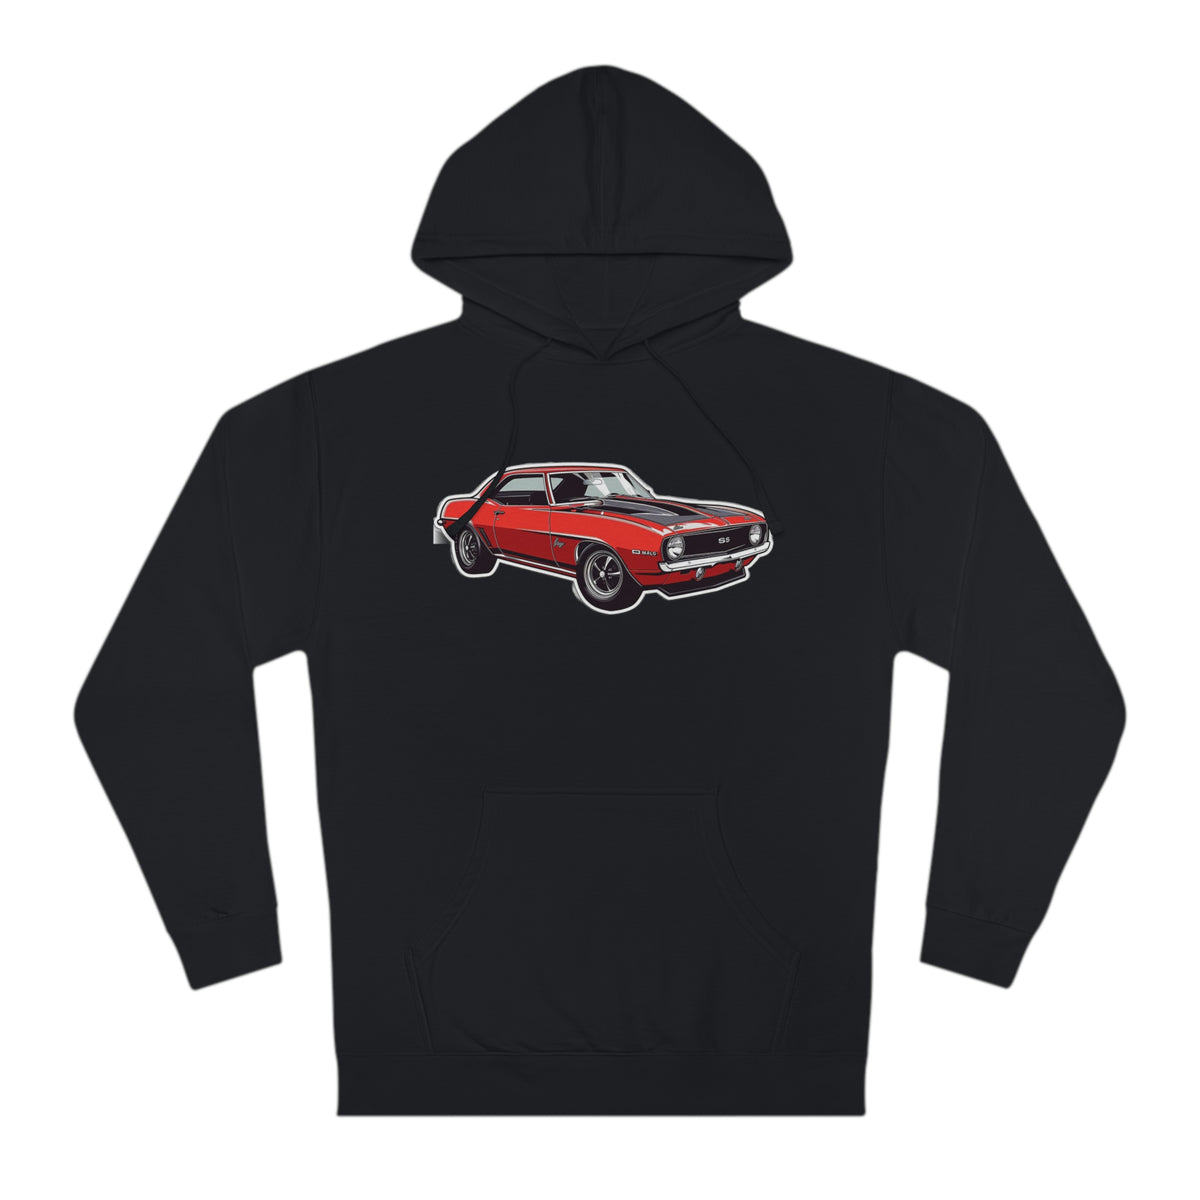 "Classic Muscle" Car Enthusiast Hoodie/Hooded Sweatshirt